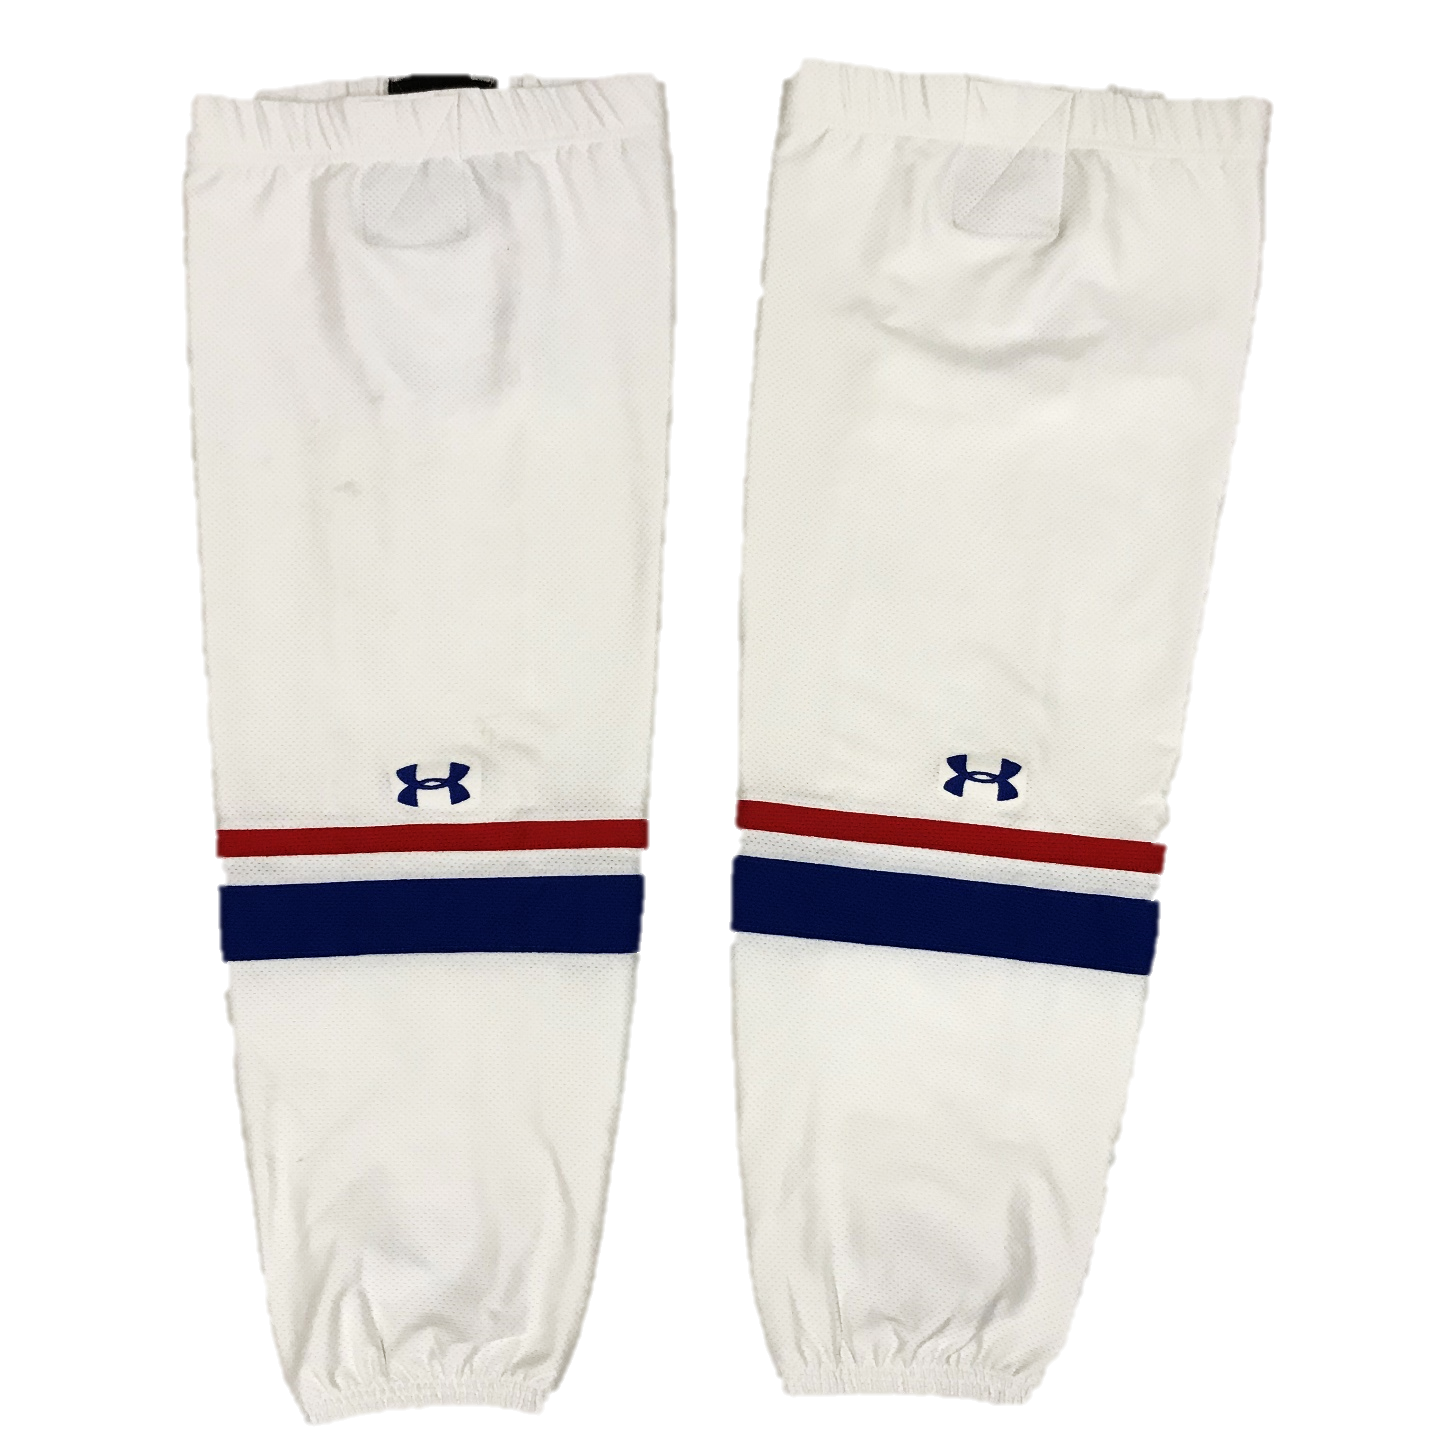 NCAA - Used Under Armour Hockey Socks (White/Red/Blue